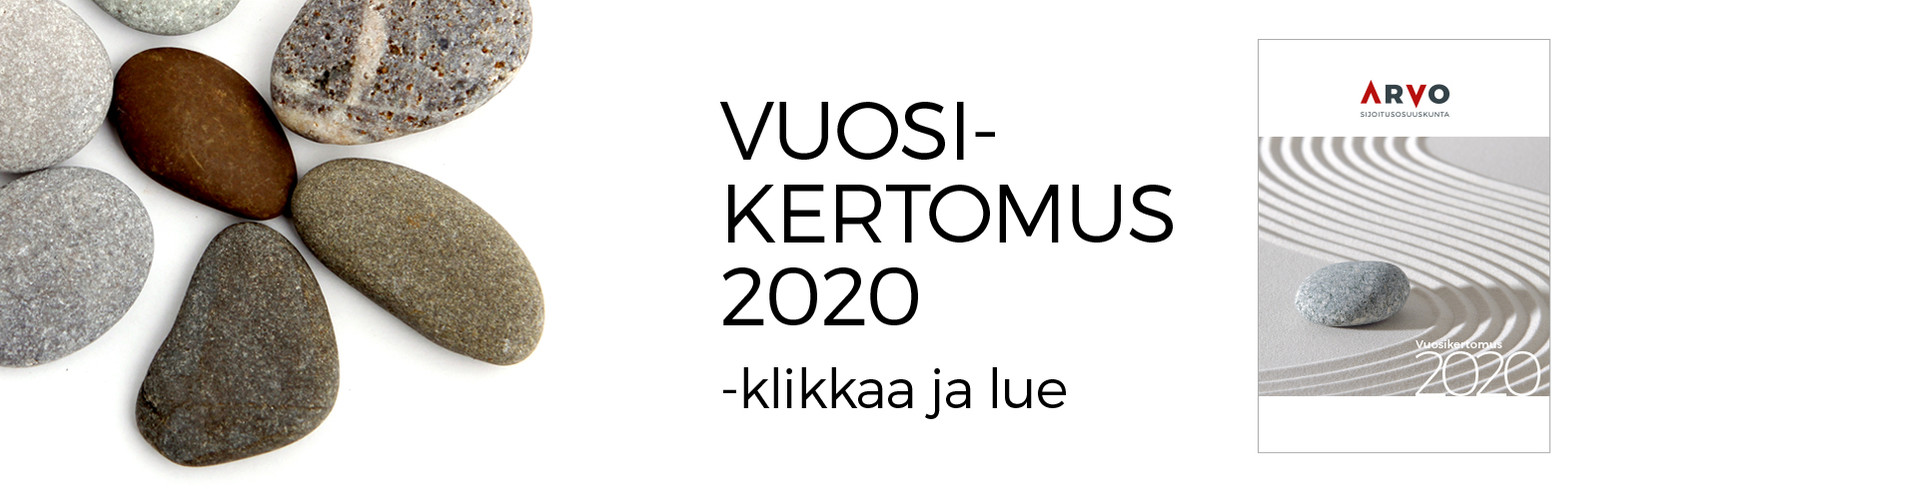 ARVO WEB vuosikertomus 2020 banner